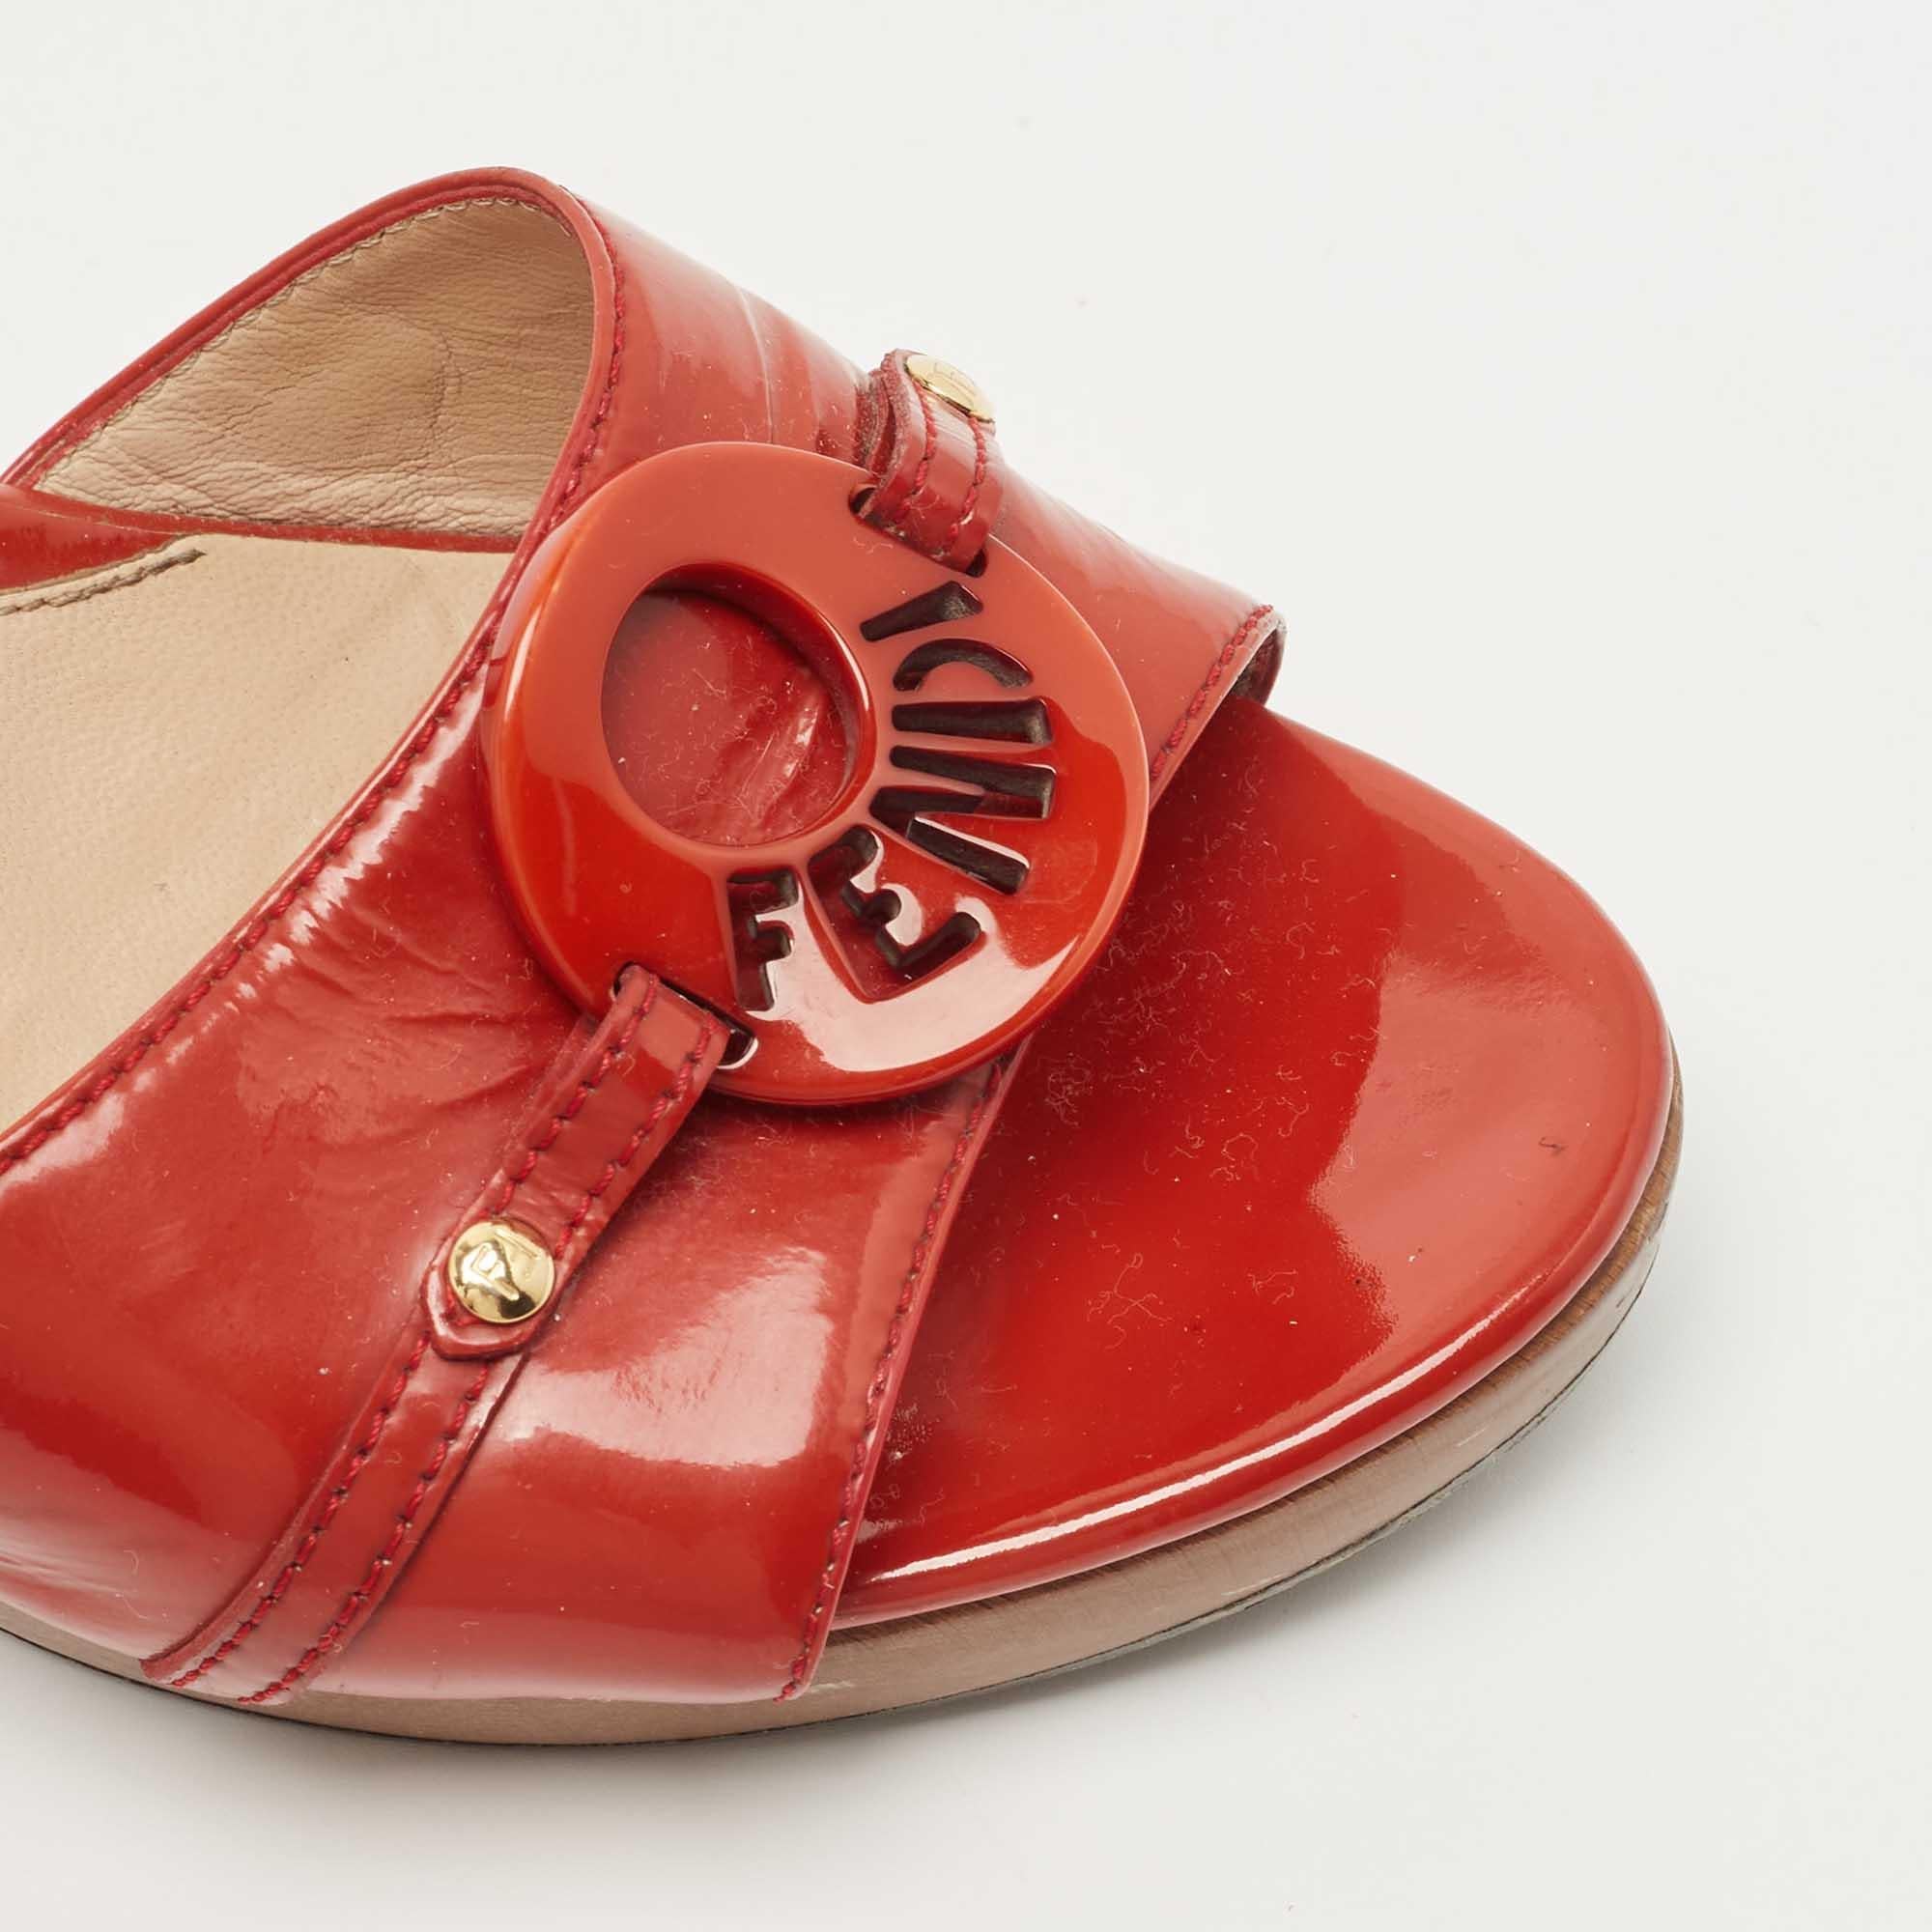 Fendi Red Patent Leather Logo Slide Sandals Size 37.5 1